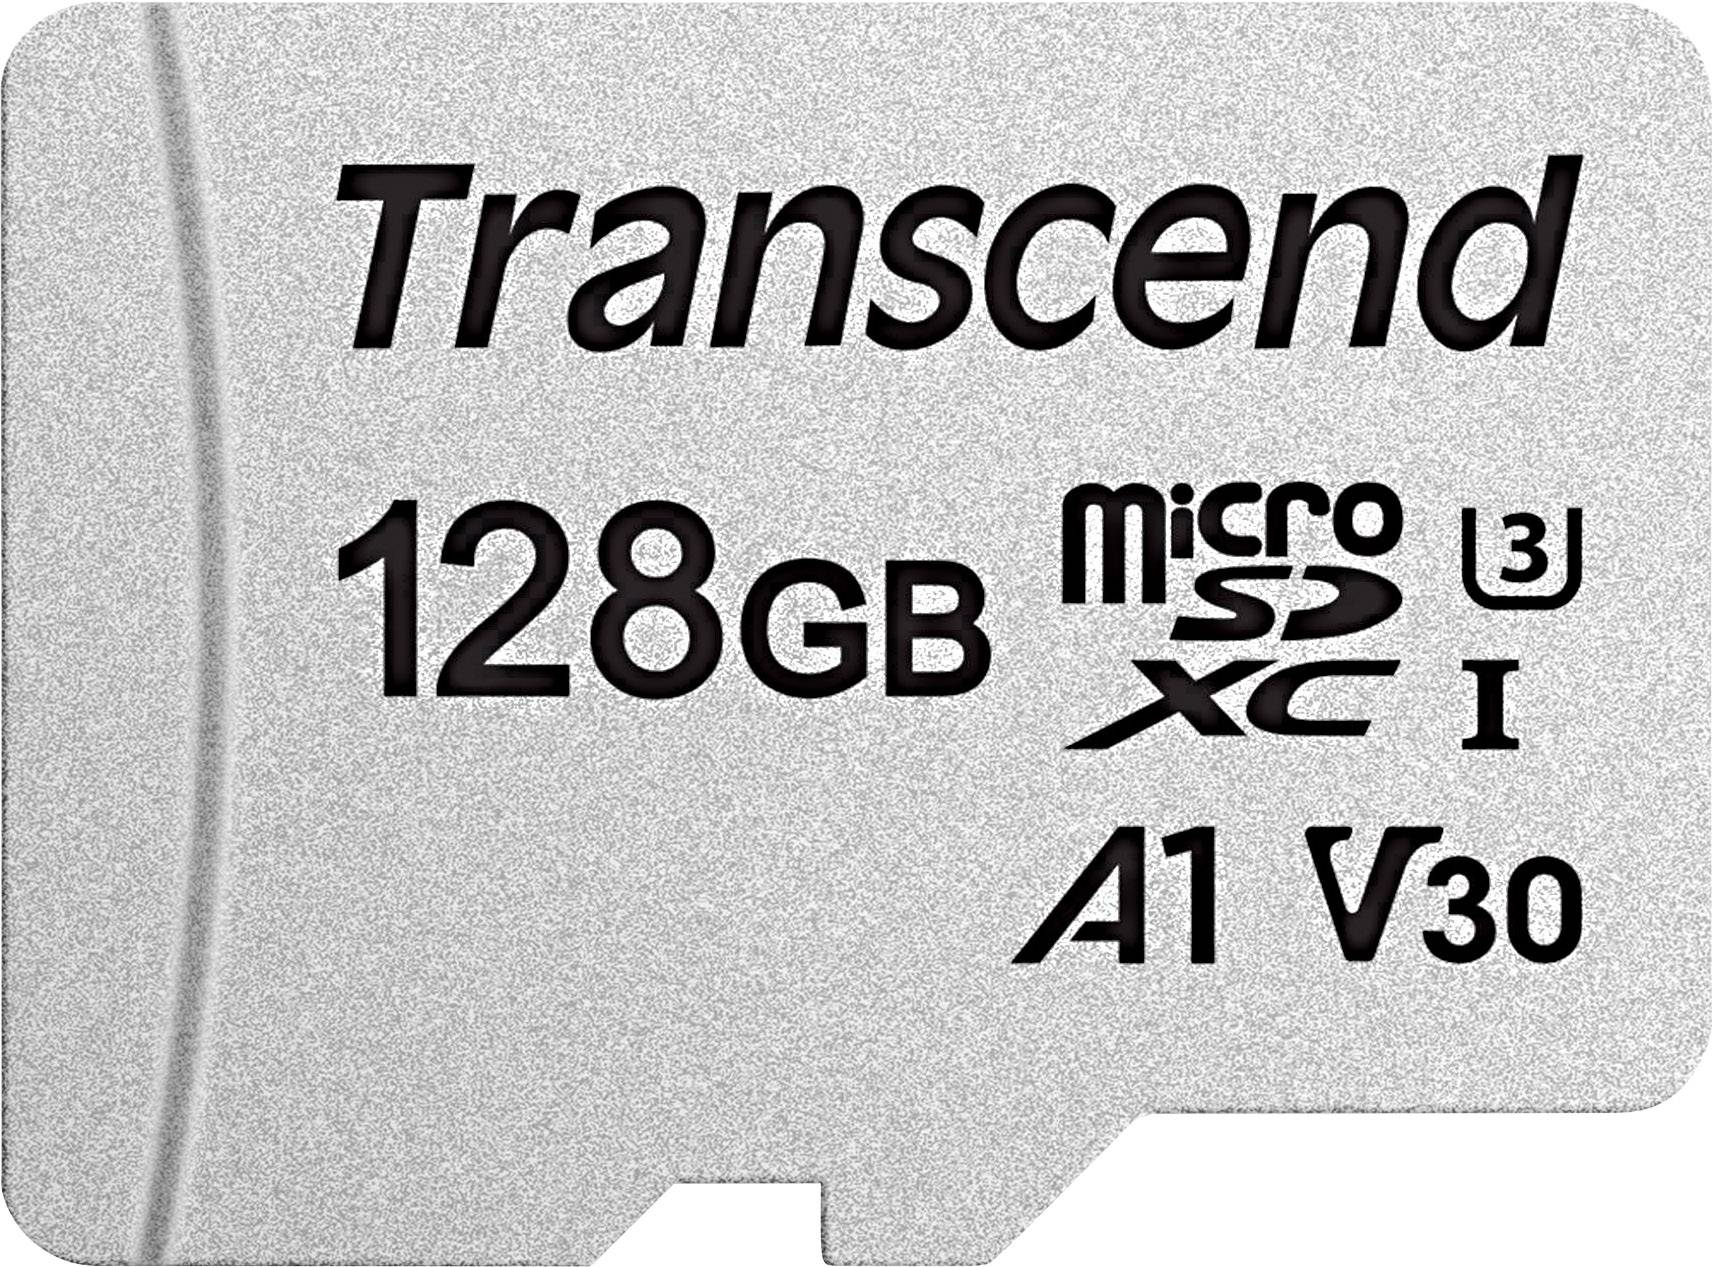 Купить микро sd карту 128 гб. Ts32gusd300s-a карта памяти Transcend. Transcend MICROSDXC 300s 128gb. Карта памяти MICROSD 32gb Transcend class10. Карта памяти Transcend MICROSDHC 300s class 10 UHS-I u1 32gb + SD Adapter.